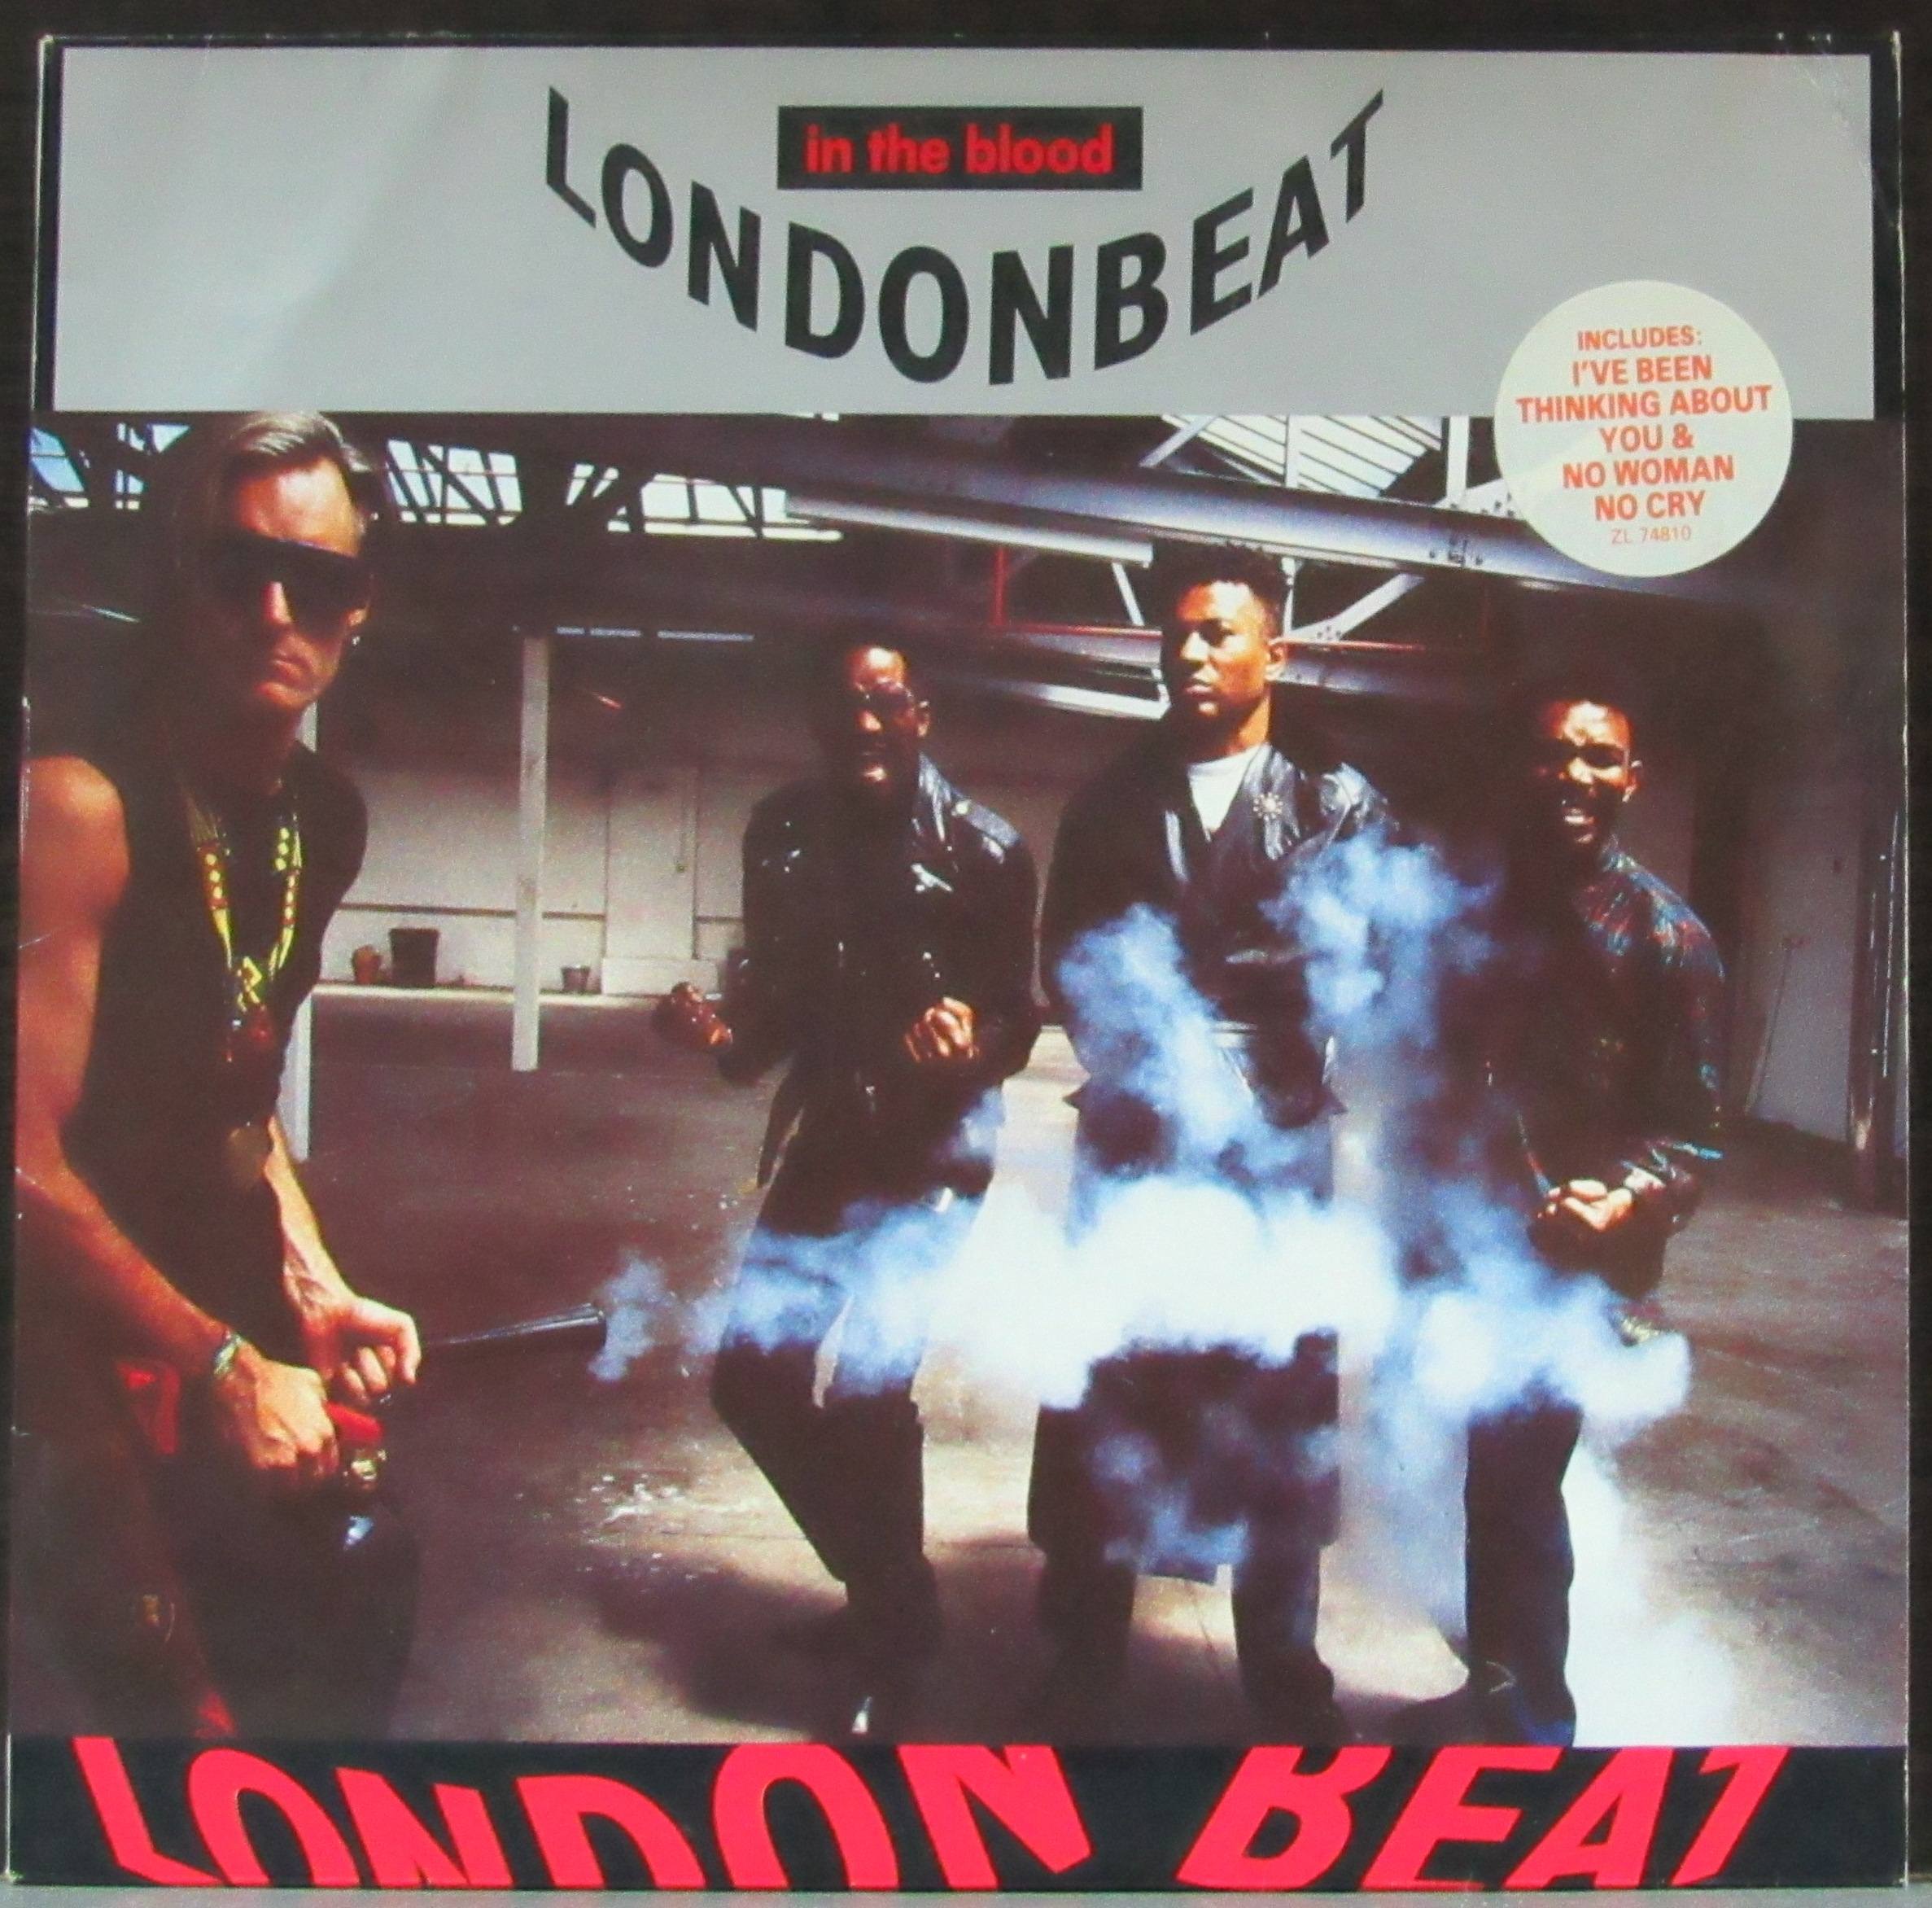 I ve been offered. Londonbeat обложка 1990. Londonbeat in the Blood 1990. Londonbeat - in the Blood - 1990 - LP. Londonbeat in the Blood album.